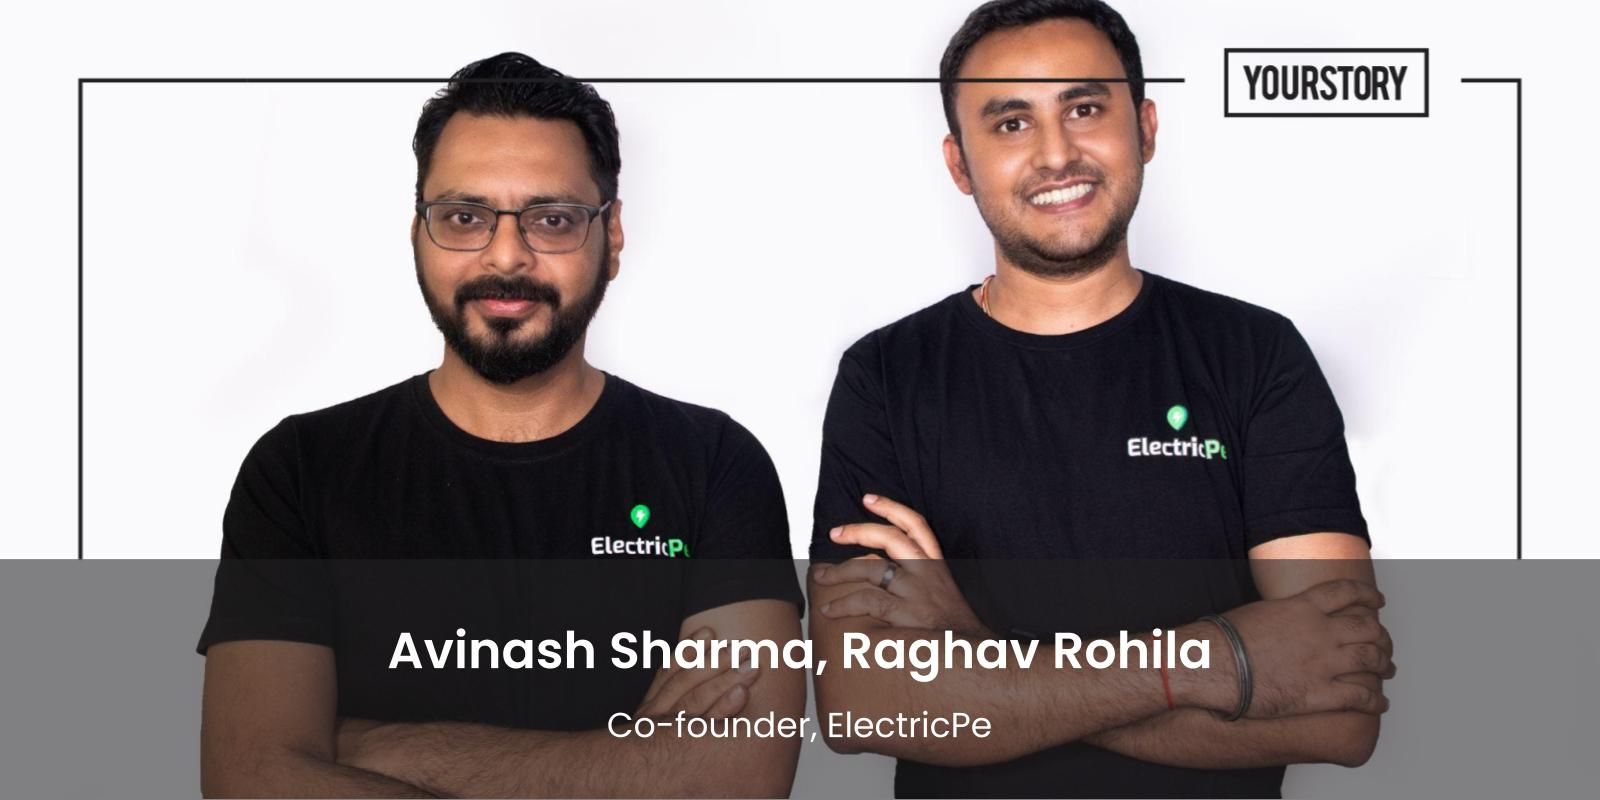 [Funding alert] EV charging platform ElectricPe raises $3M led by Blume Ventures and Micelio Fund 